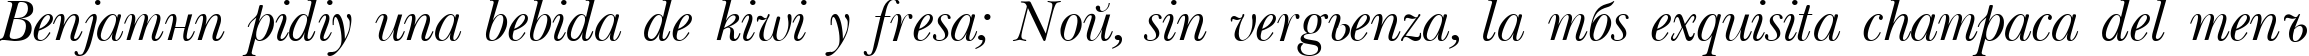 Пример написания шрифтом Baskerville Light Italic текста на испанском